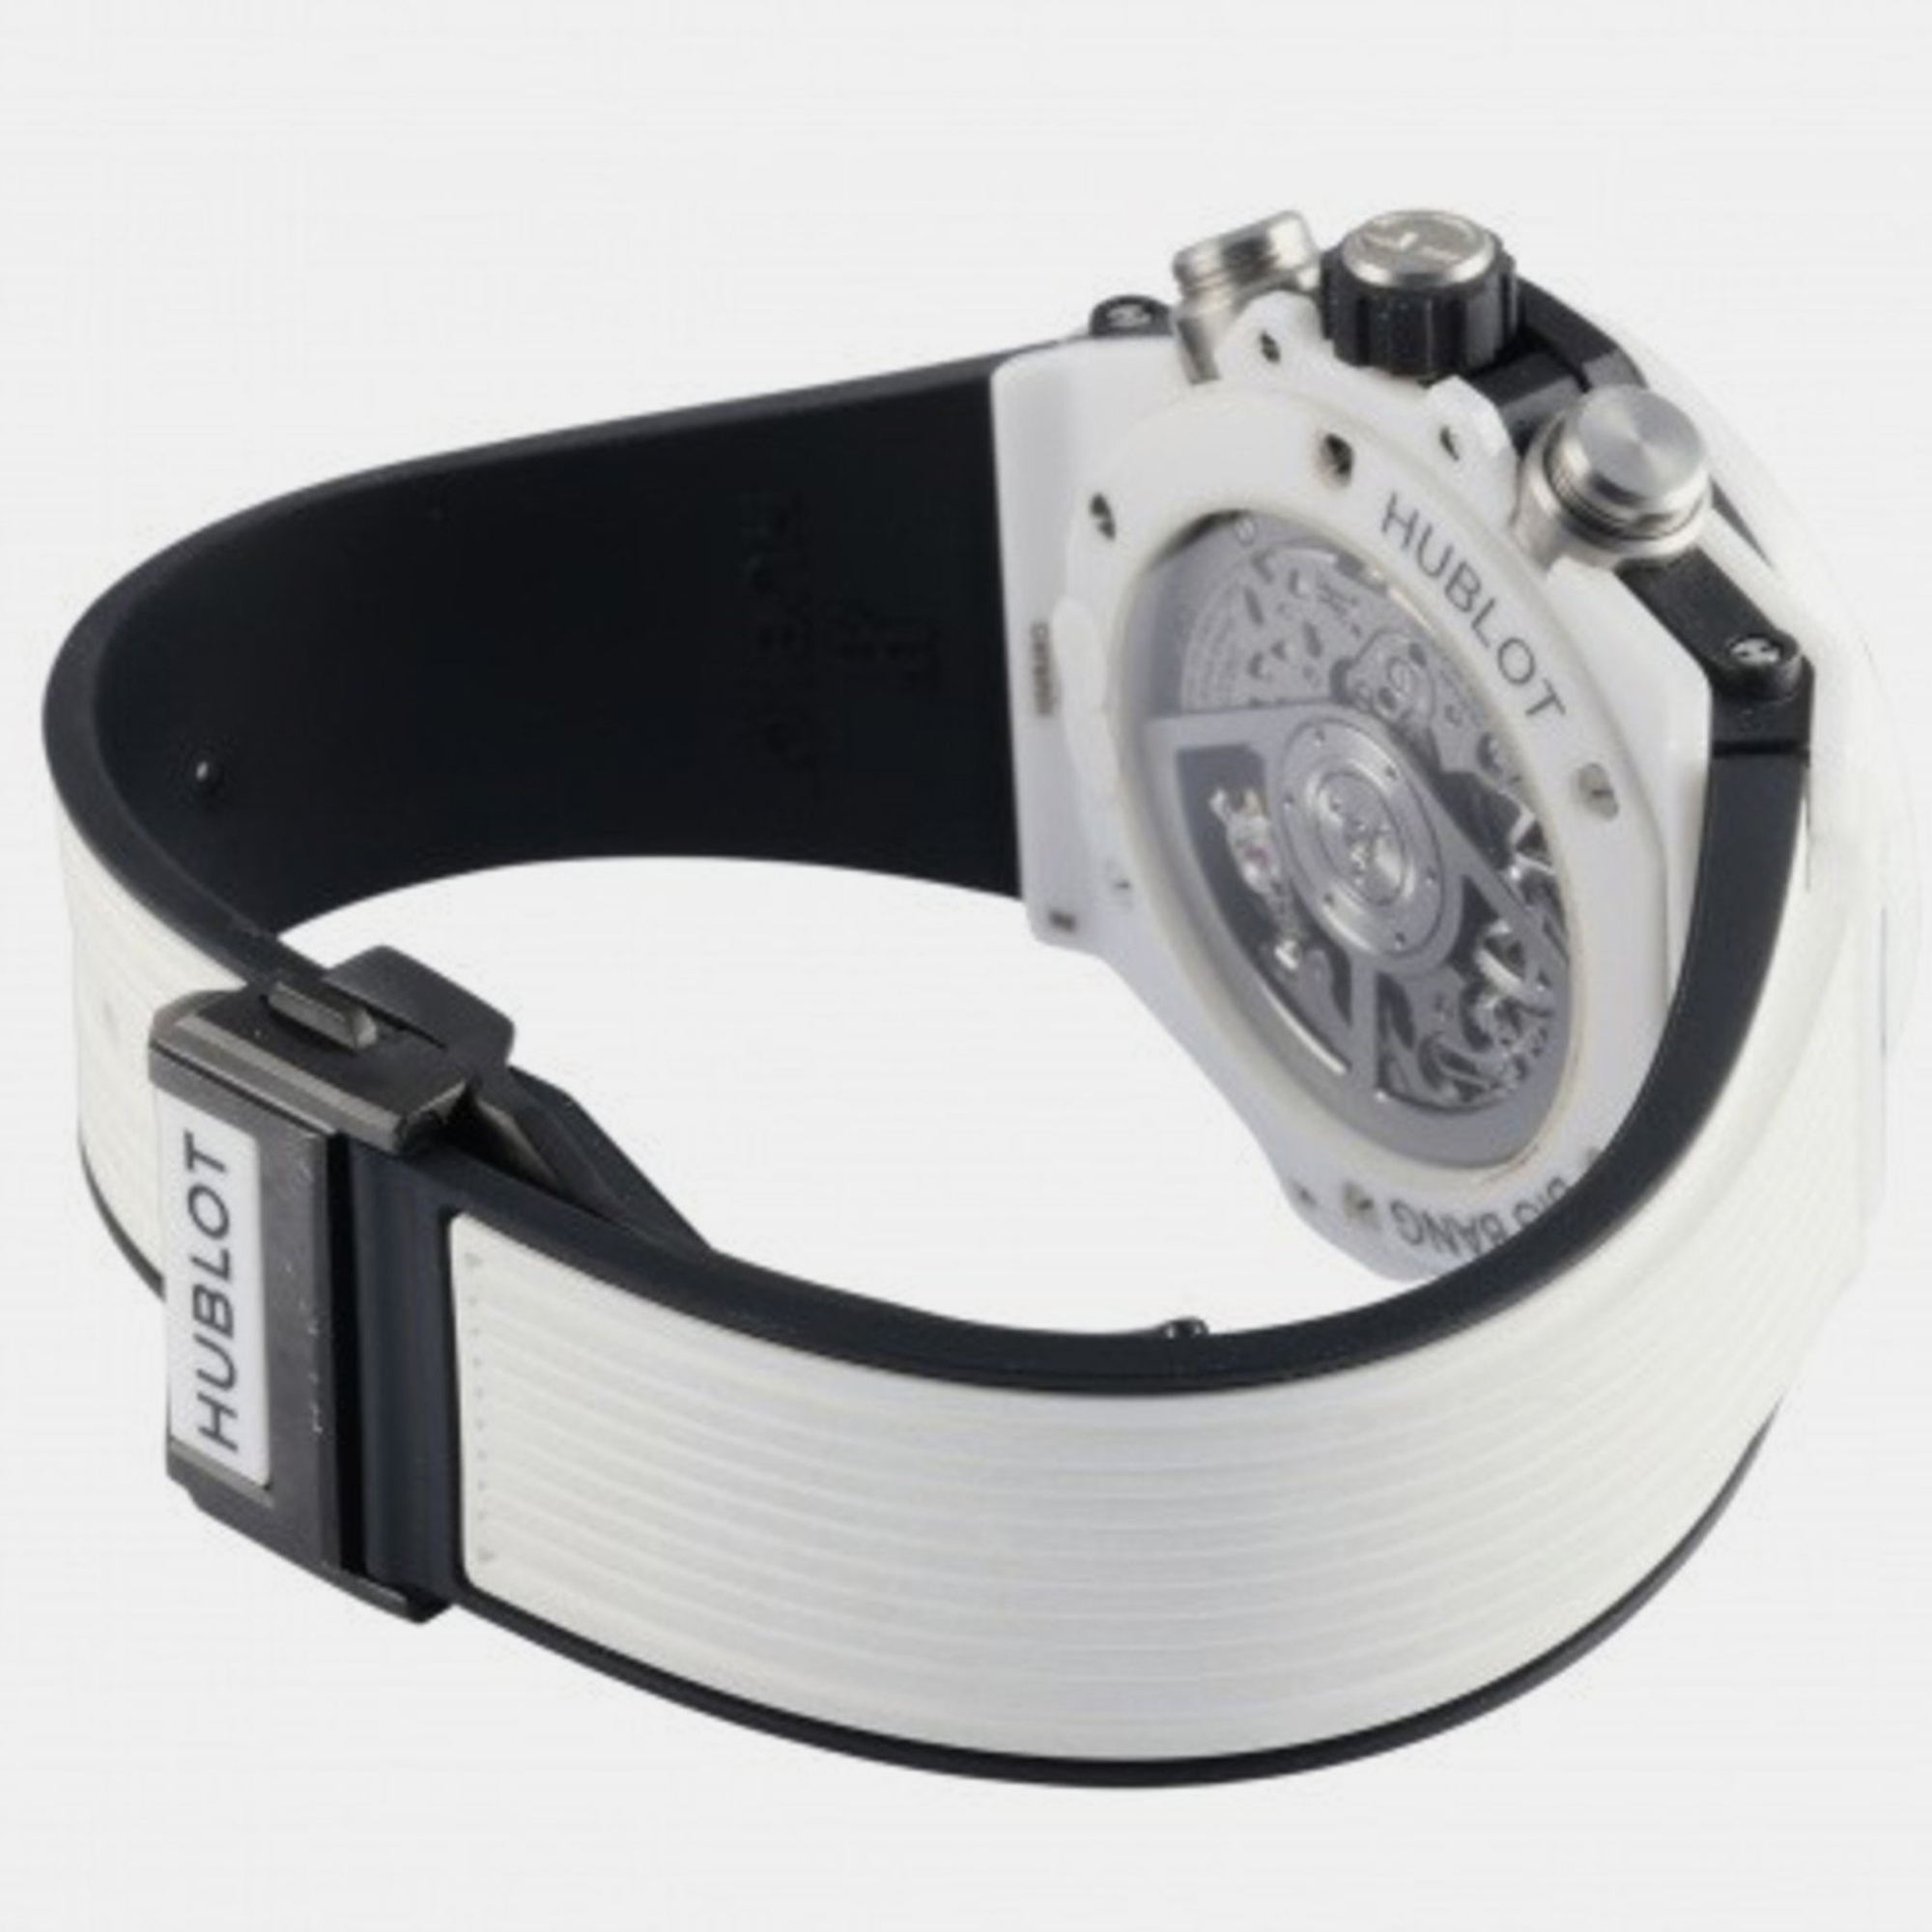 Hublot Grey Ceramic Big Bang 441.HX.1170.RX Automatic Men's Wristwatch 42 Mm